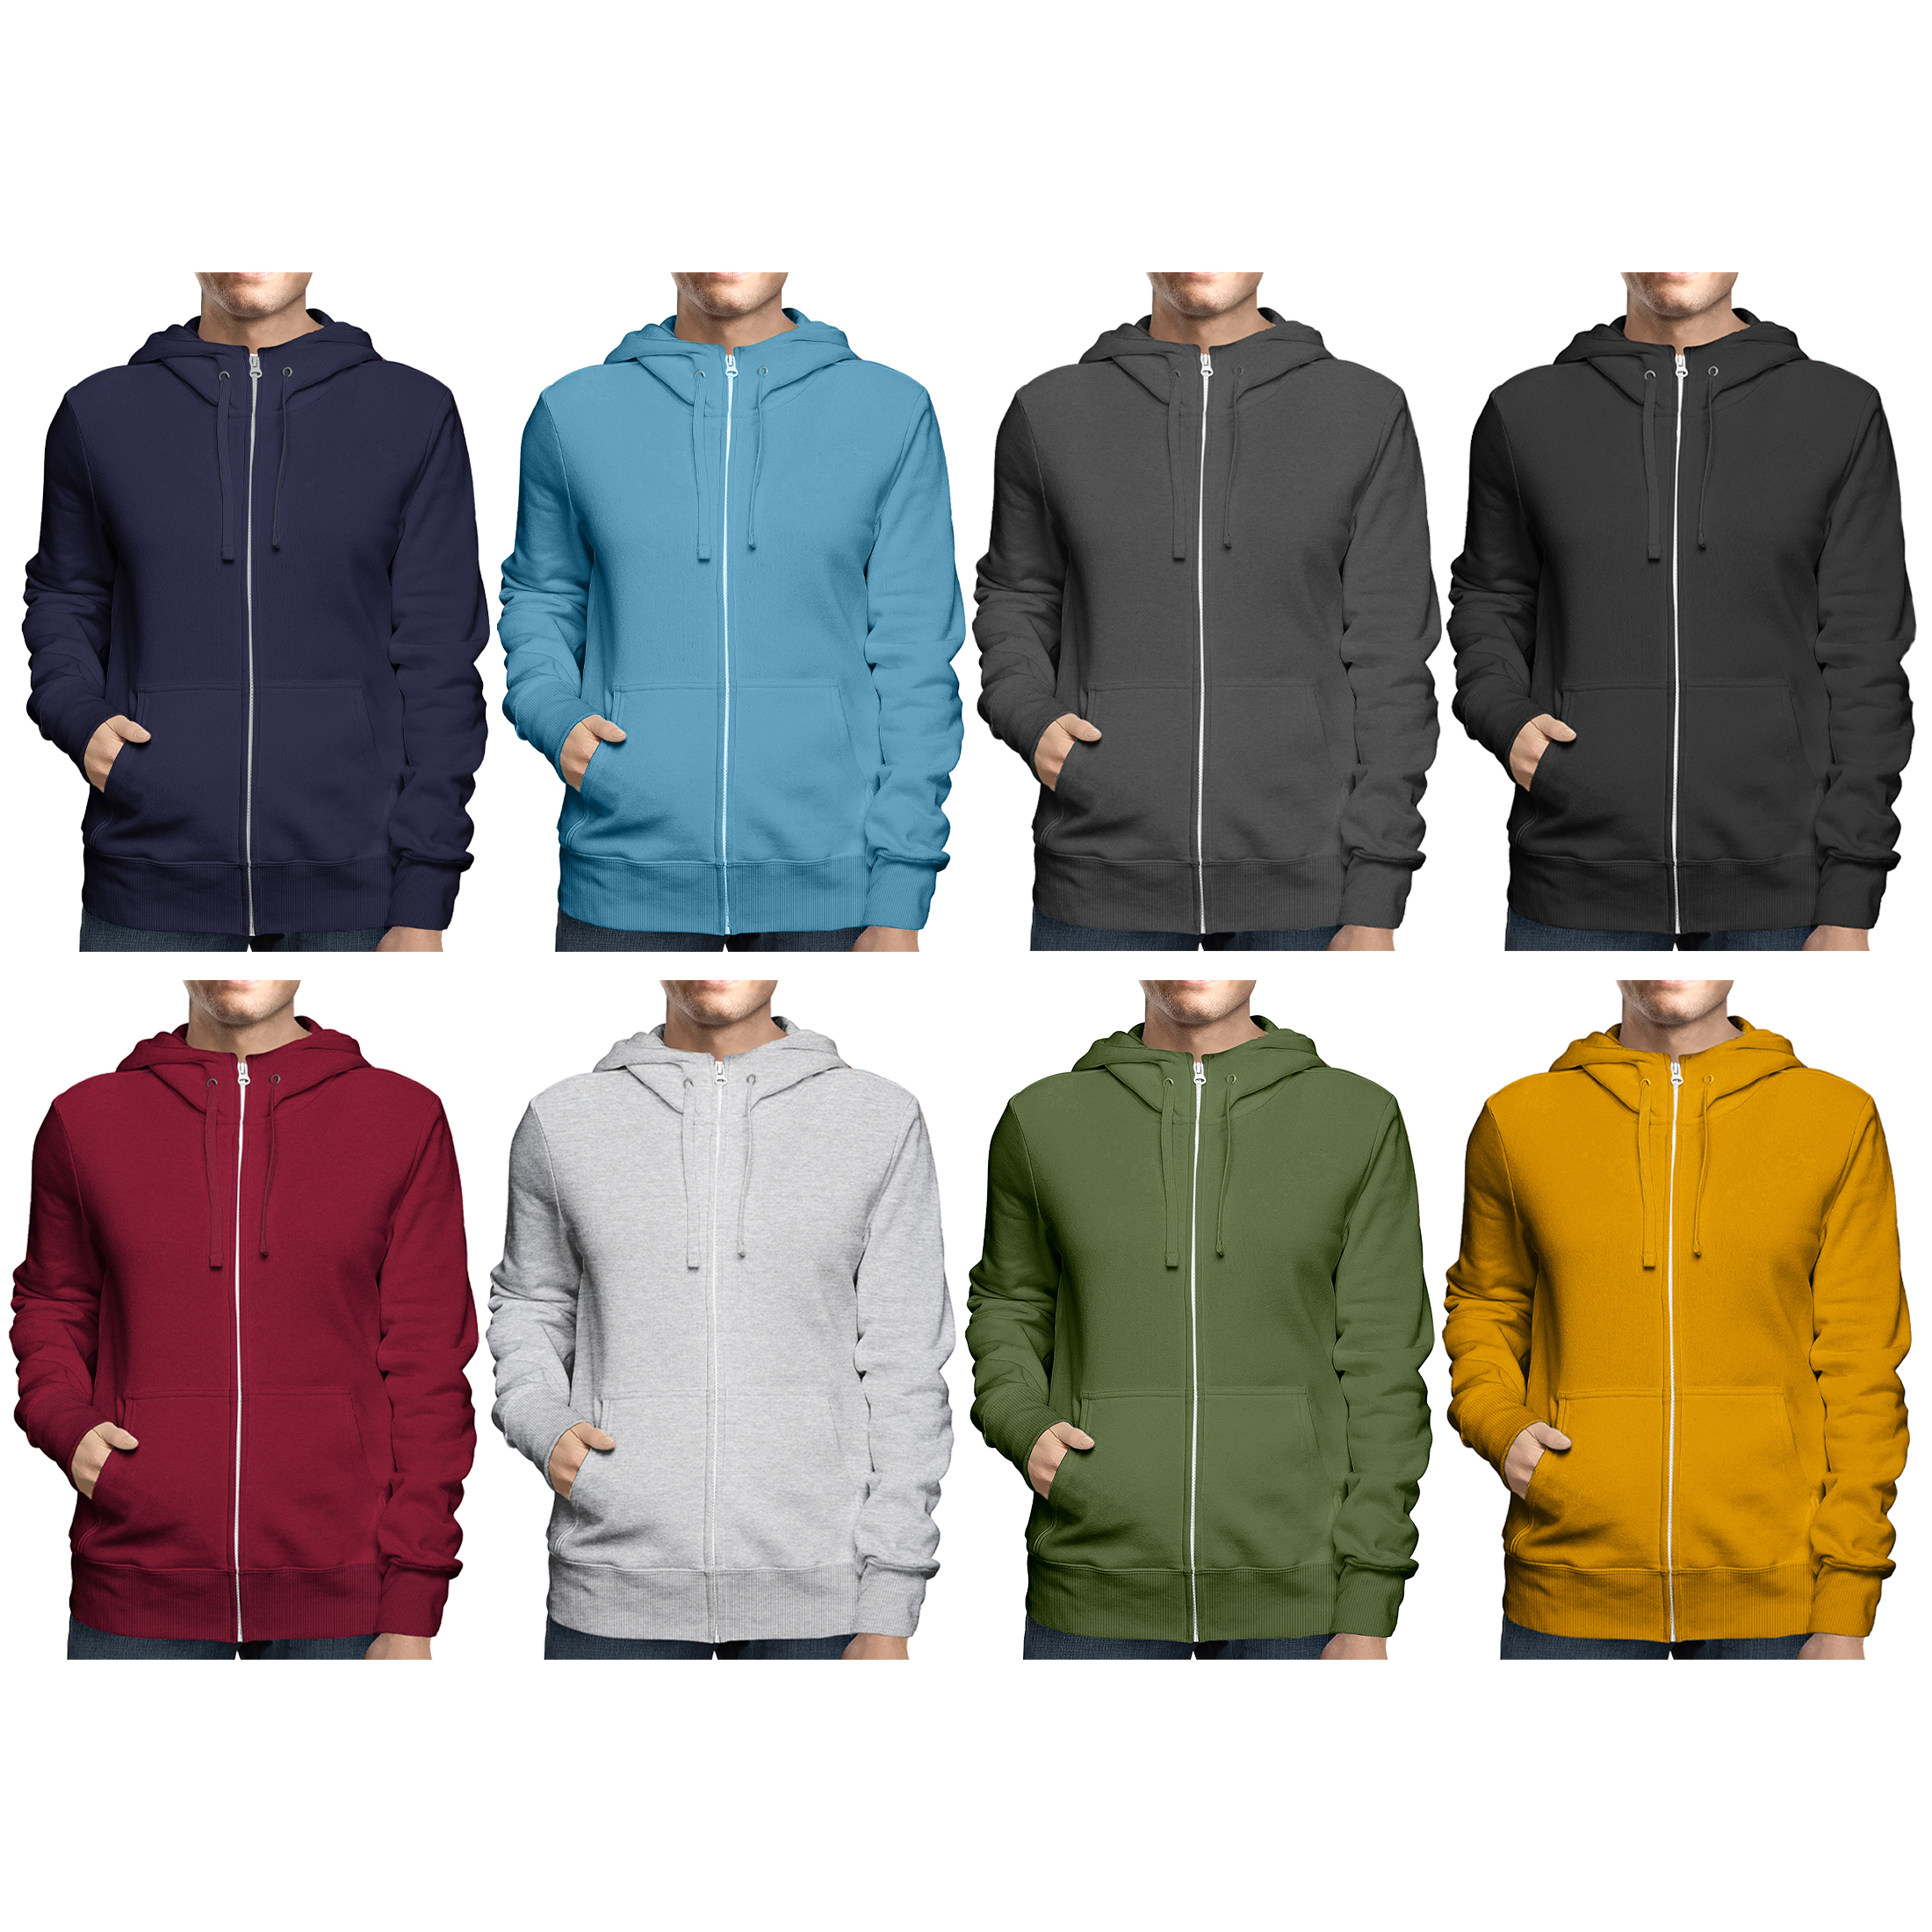 2-Pack: Men's Full Zip Up Fleece-Lined Hoodie Sweatshirt (Big & Tall Size Available) - Charcoal & Timberland, Medium